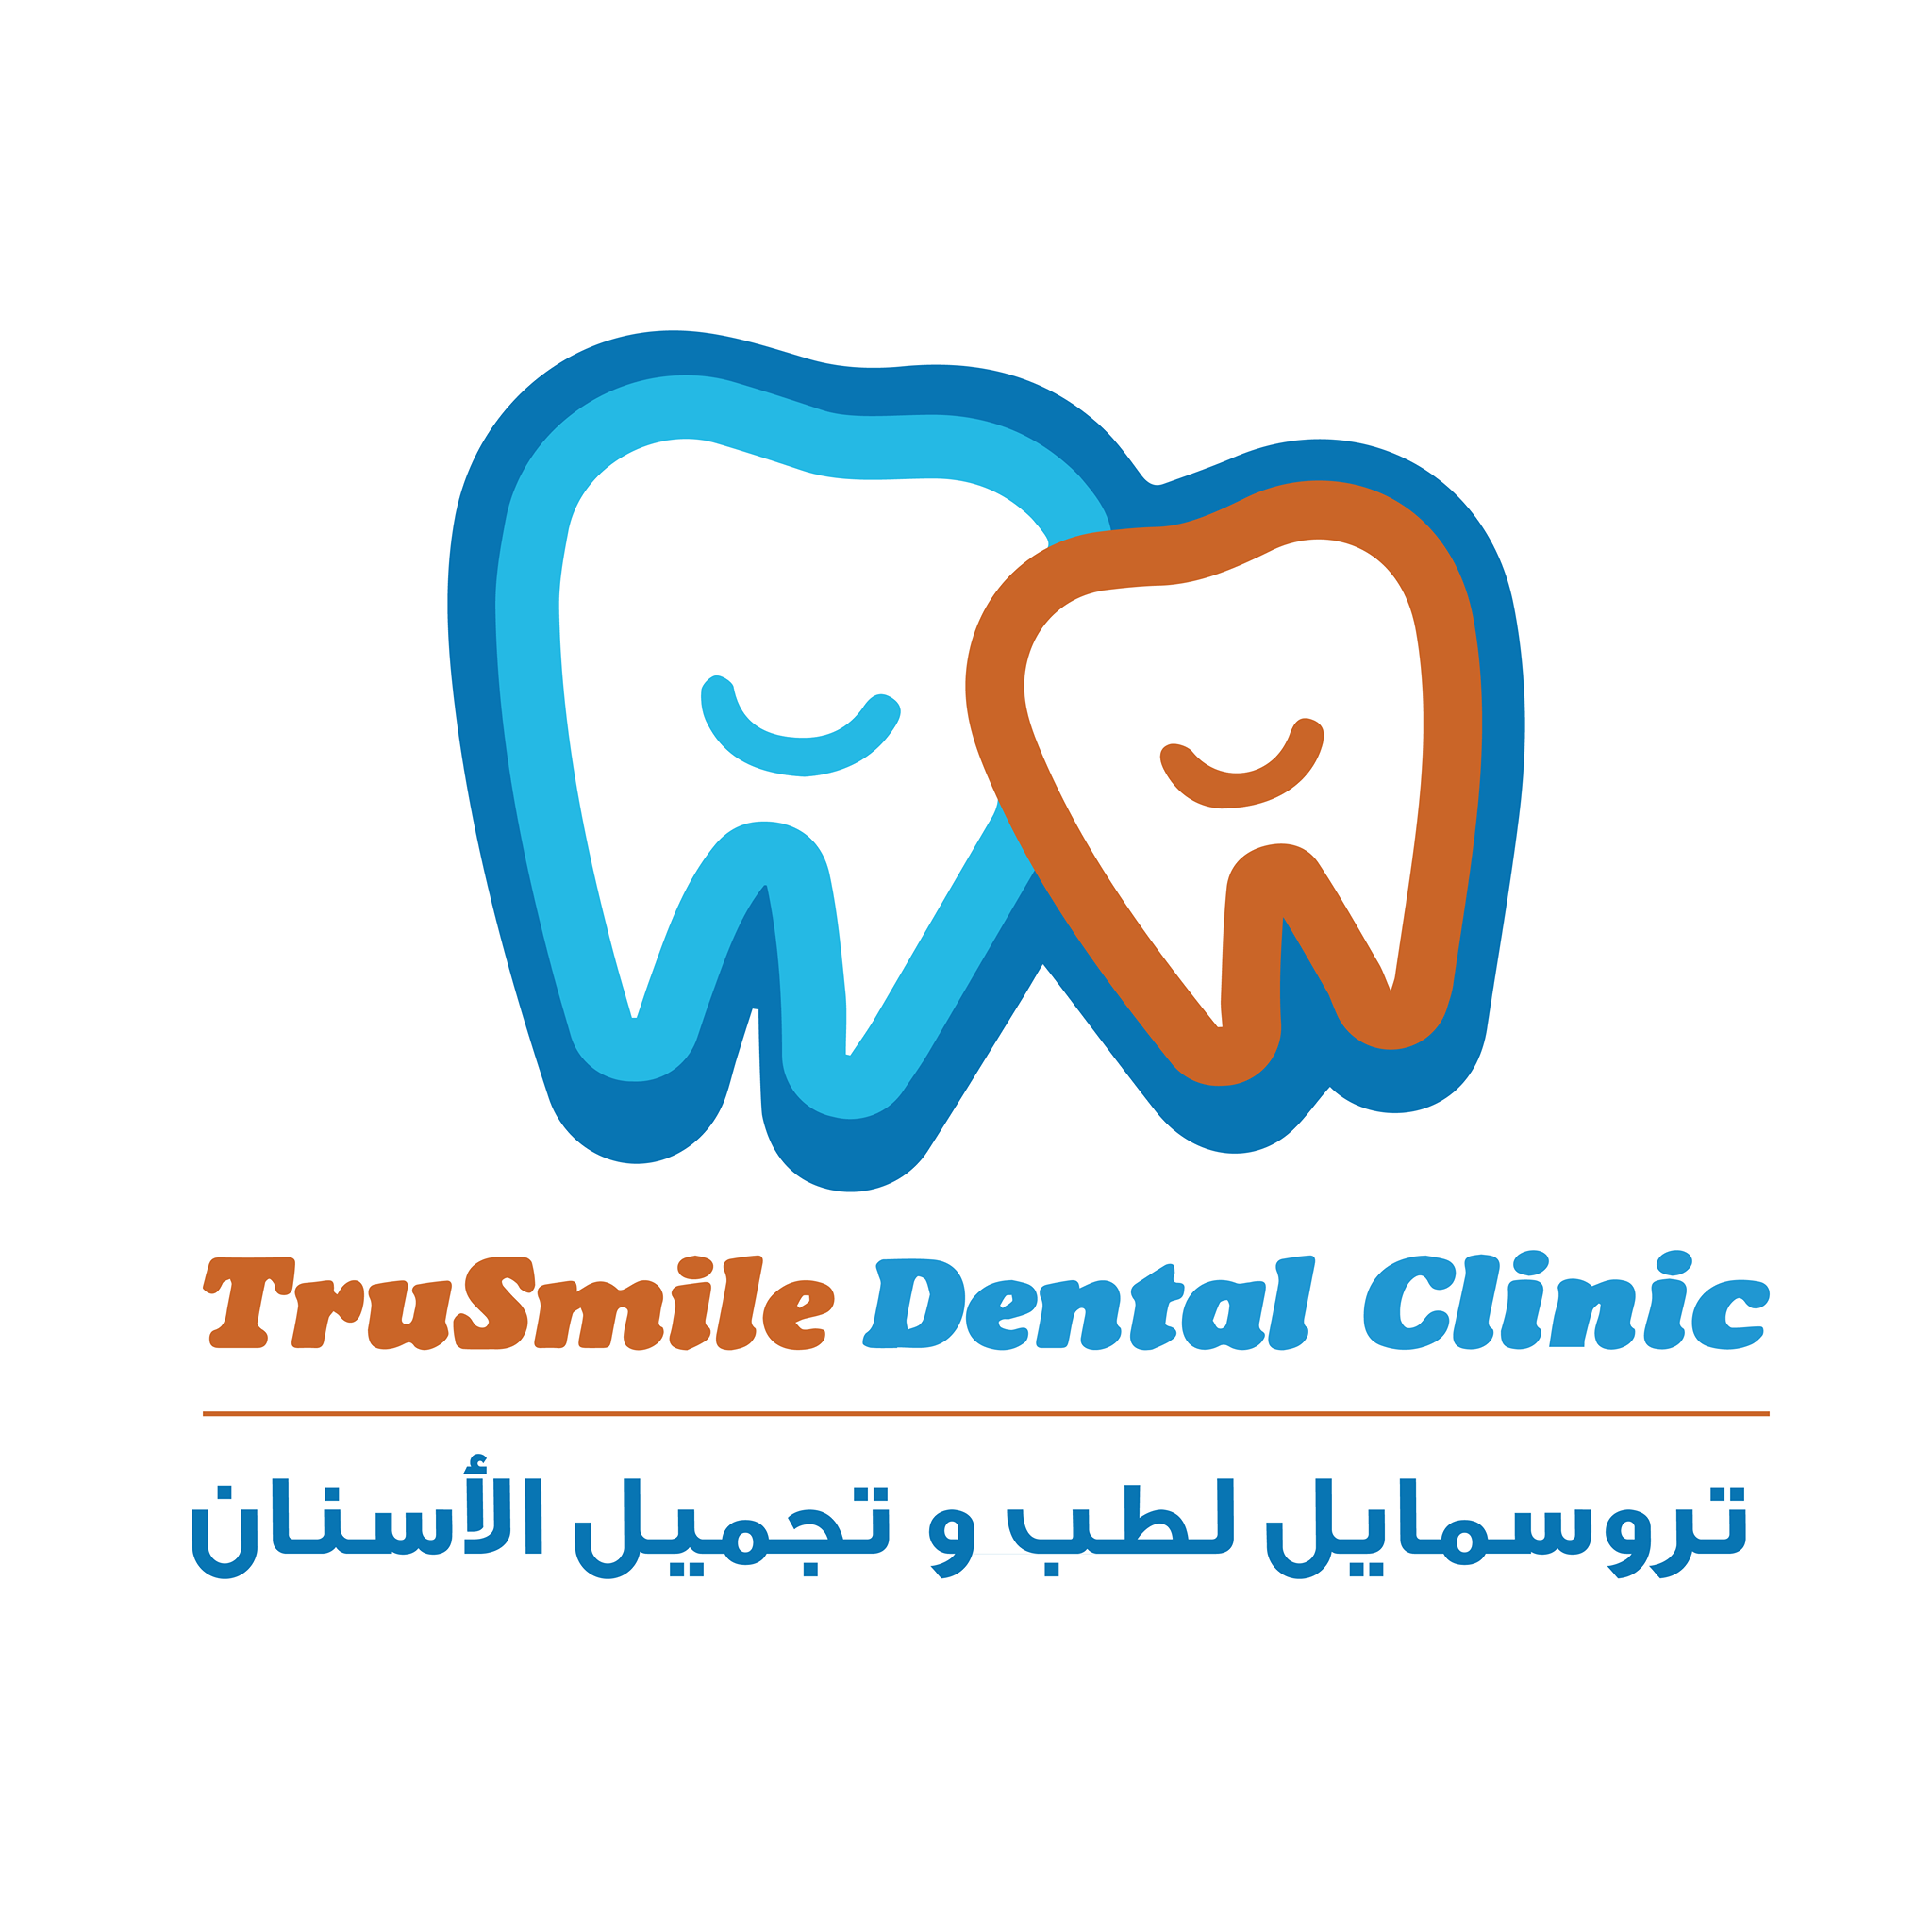 TruSmile Dental Clinic